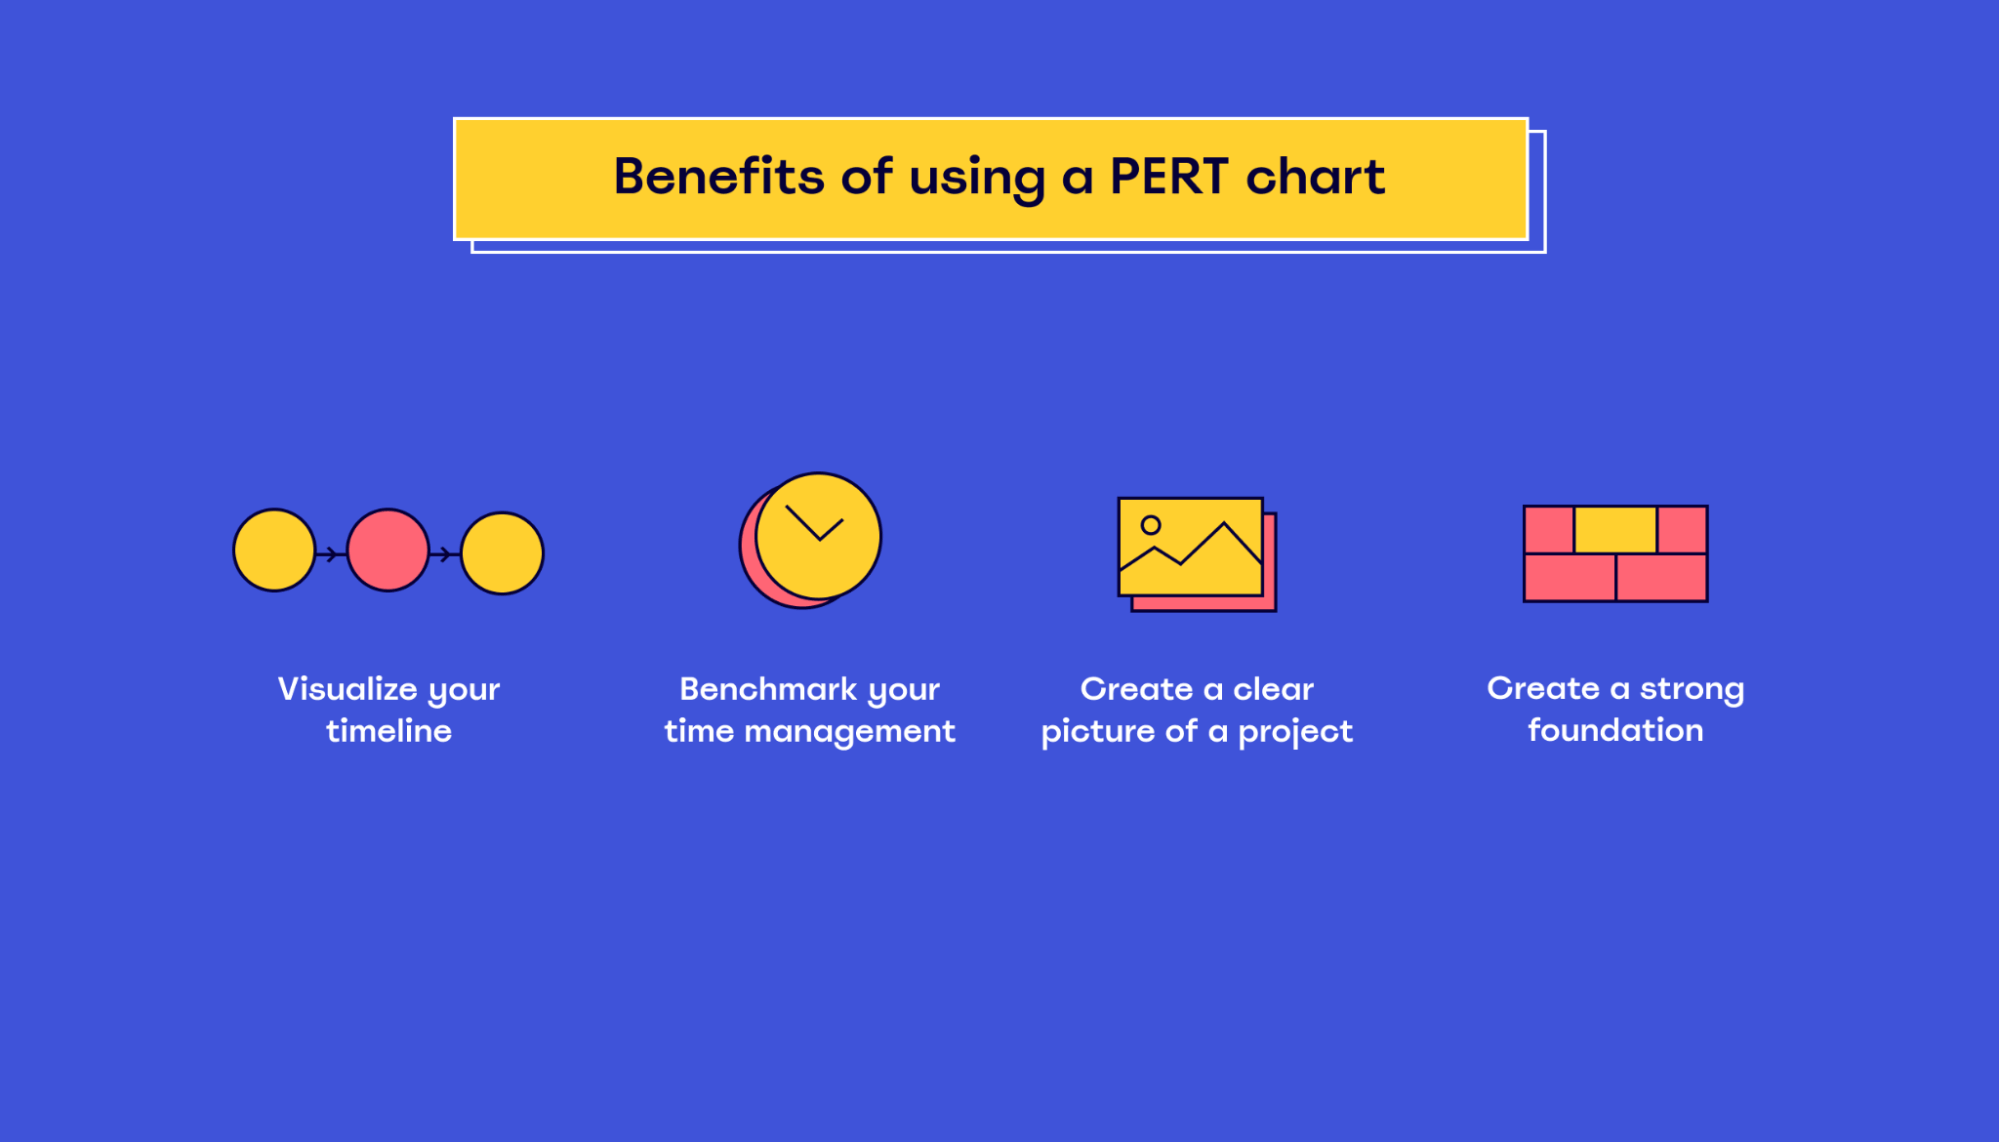 Benefits of using a PERT chart